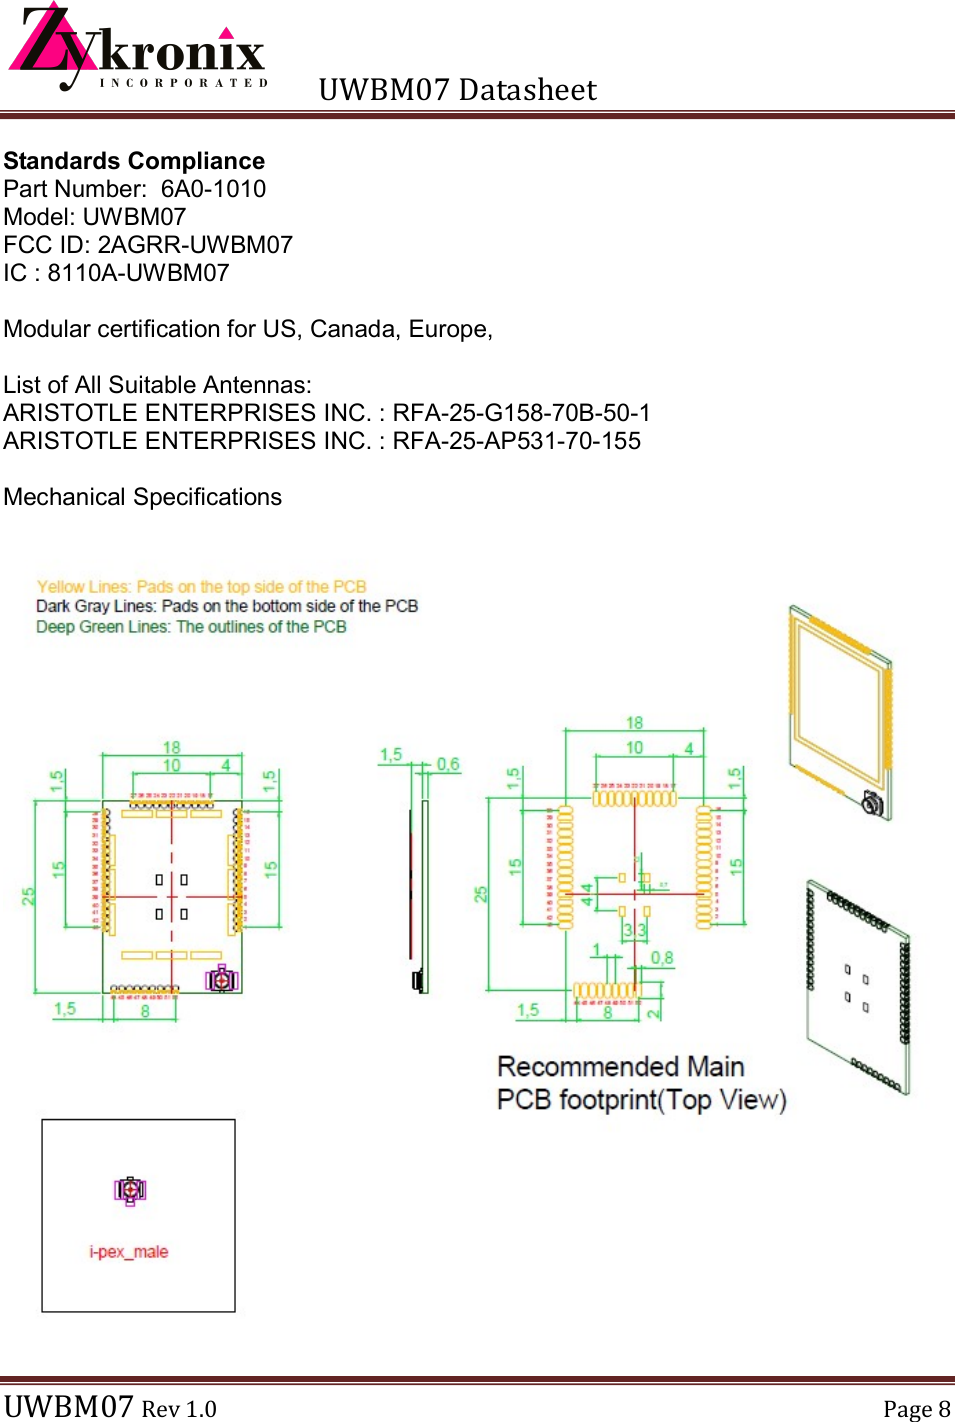      UWBM07 Datasheet  UWBM07 Rev 1.0  Page 8  Standards Compliance Part Number:  6A0-1010 Model: UWBM07 FCC ID: 2AGRR-UWBM07 IC : 8110A-UWBM07  Modular certification for US, Canada, Europe,   List of All Suitable Antennas: ARISTOTLE ENTERPRISES INC. : RFA-25-G158-70B-50-1 ARISTOTLE ENTERPRISES INC. : RFA-25-AP531-70-155  Mechanical Specifications    